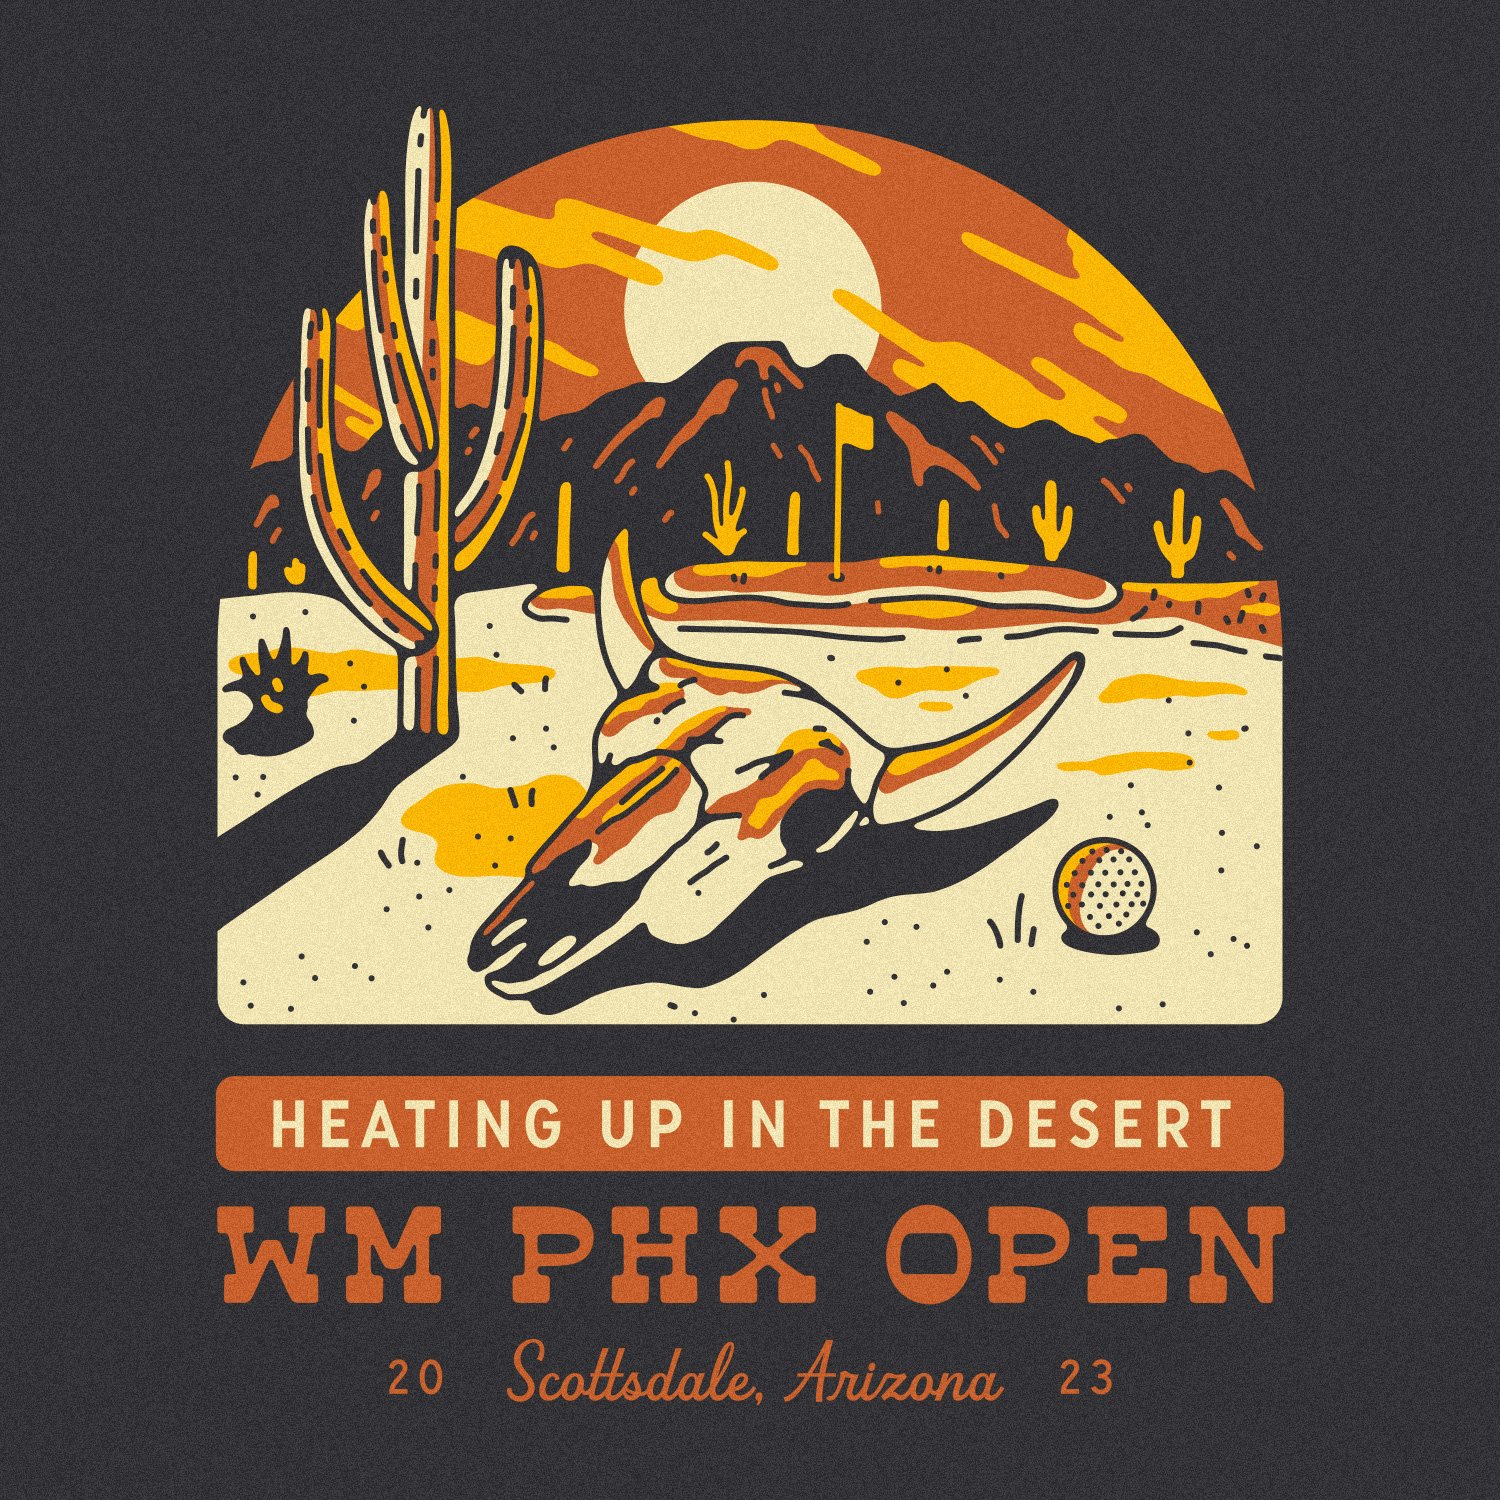  WM Phoenix Open shirt design by Cactus Country. 